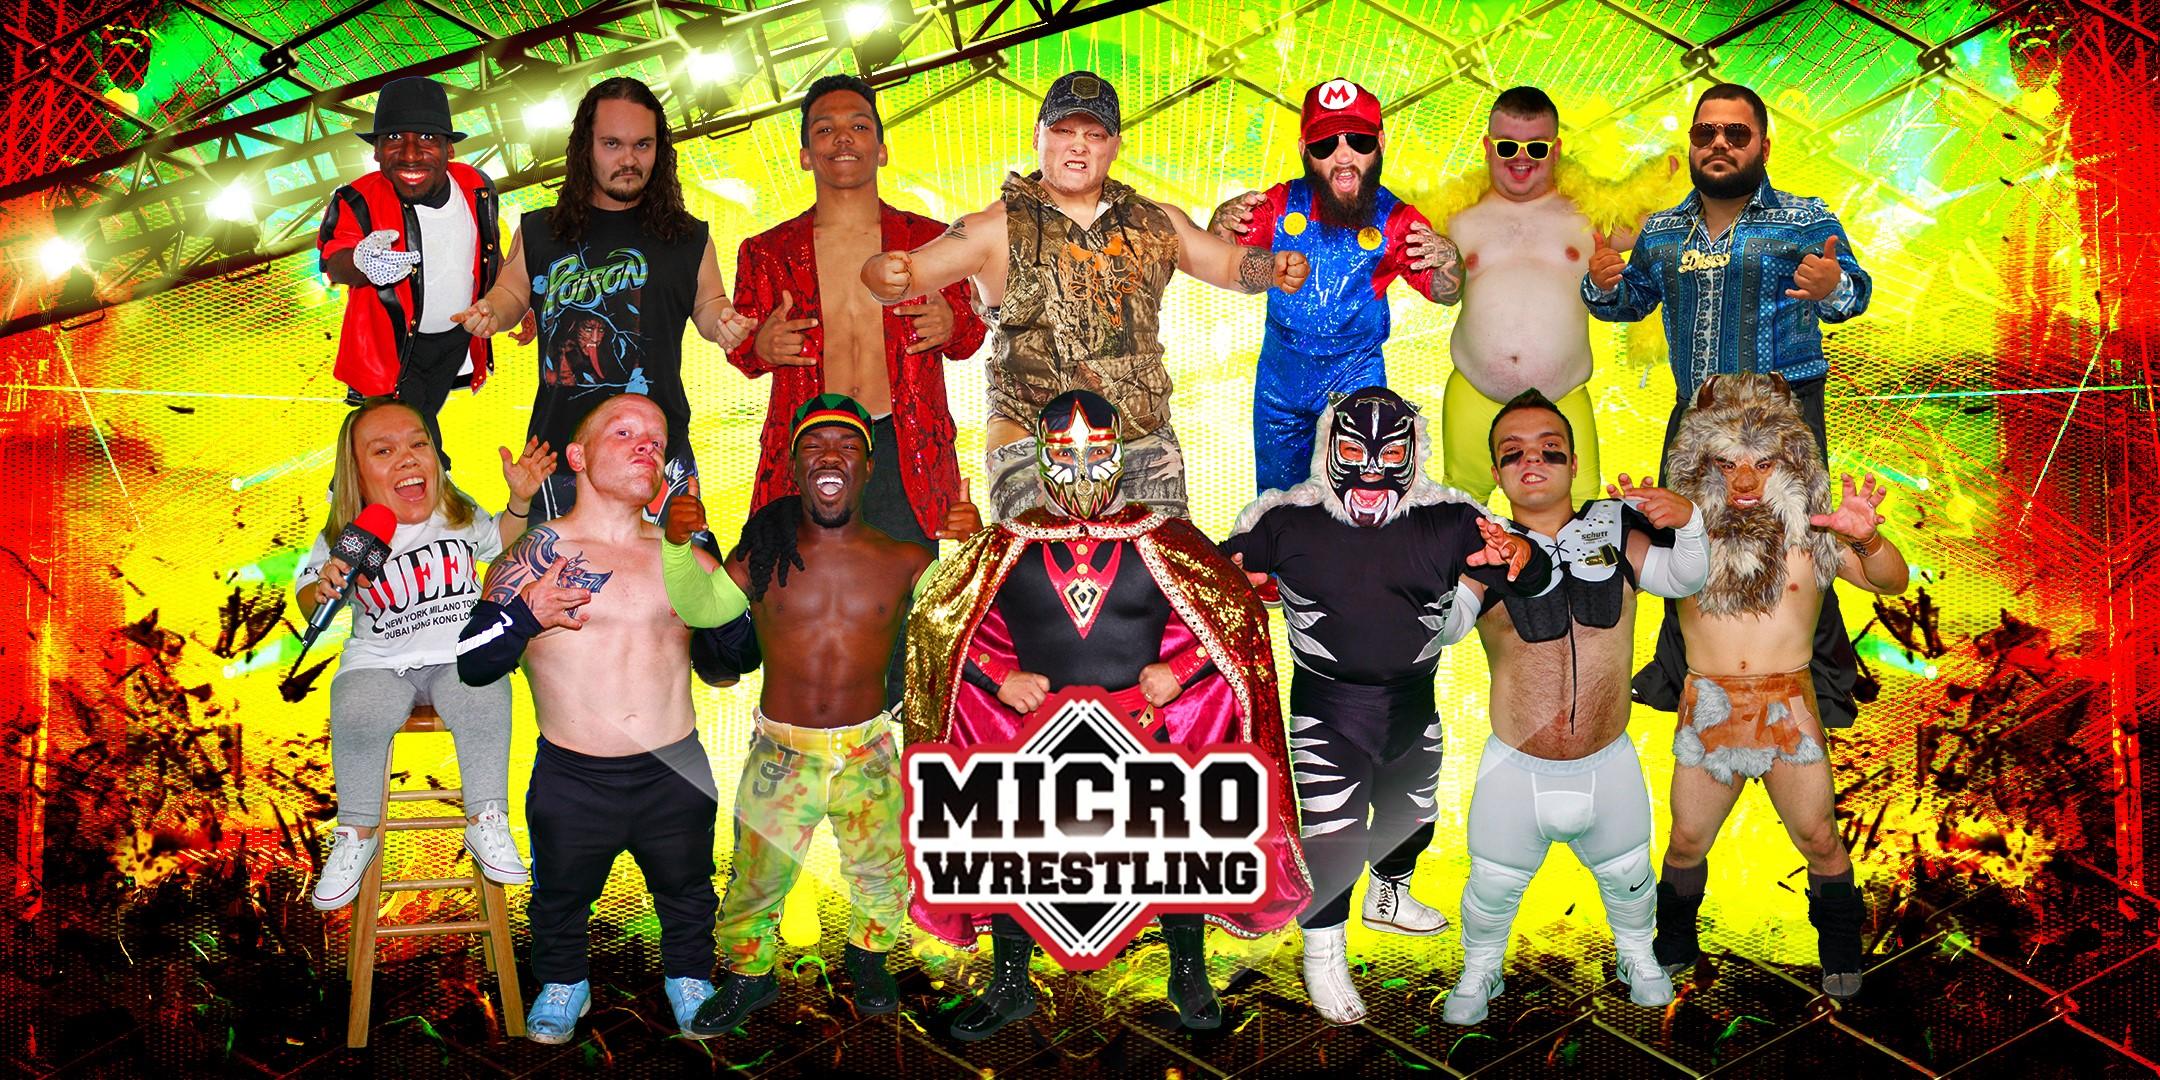 Micro Wrestling Invades Chuluota, FL!